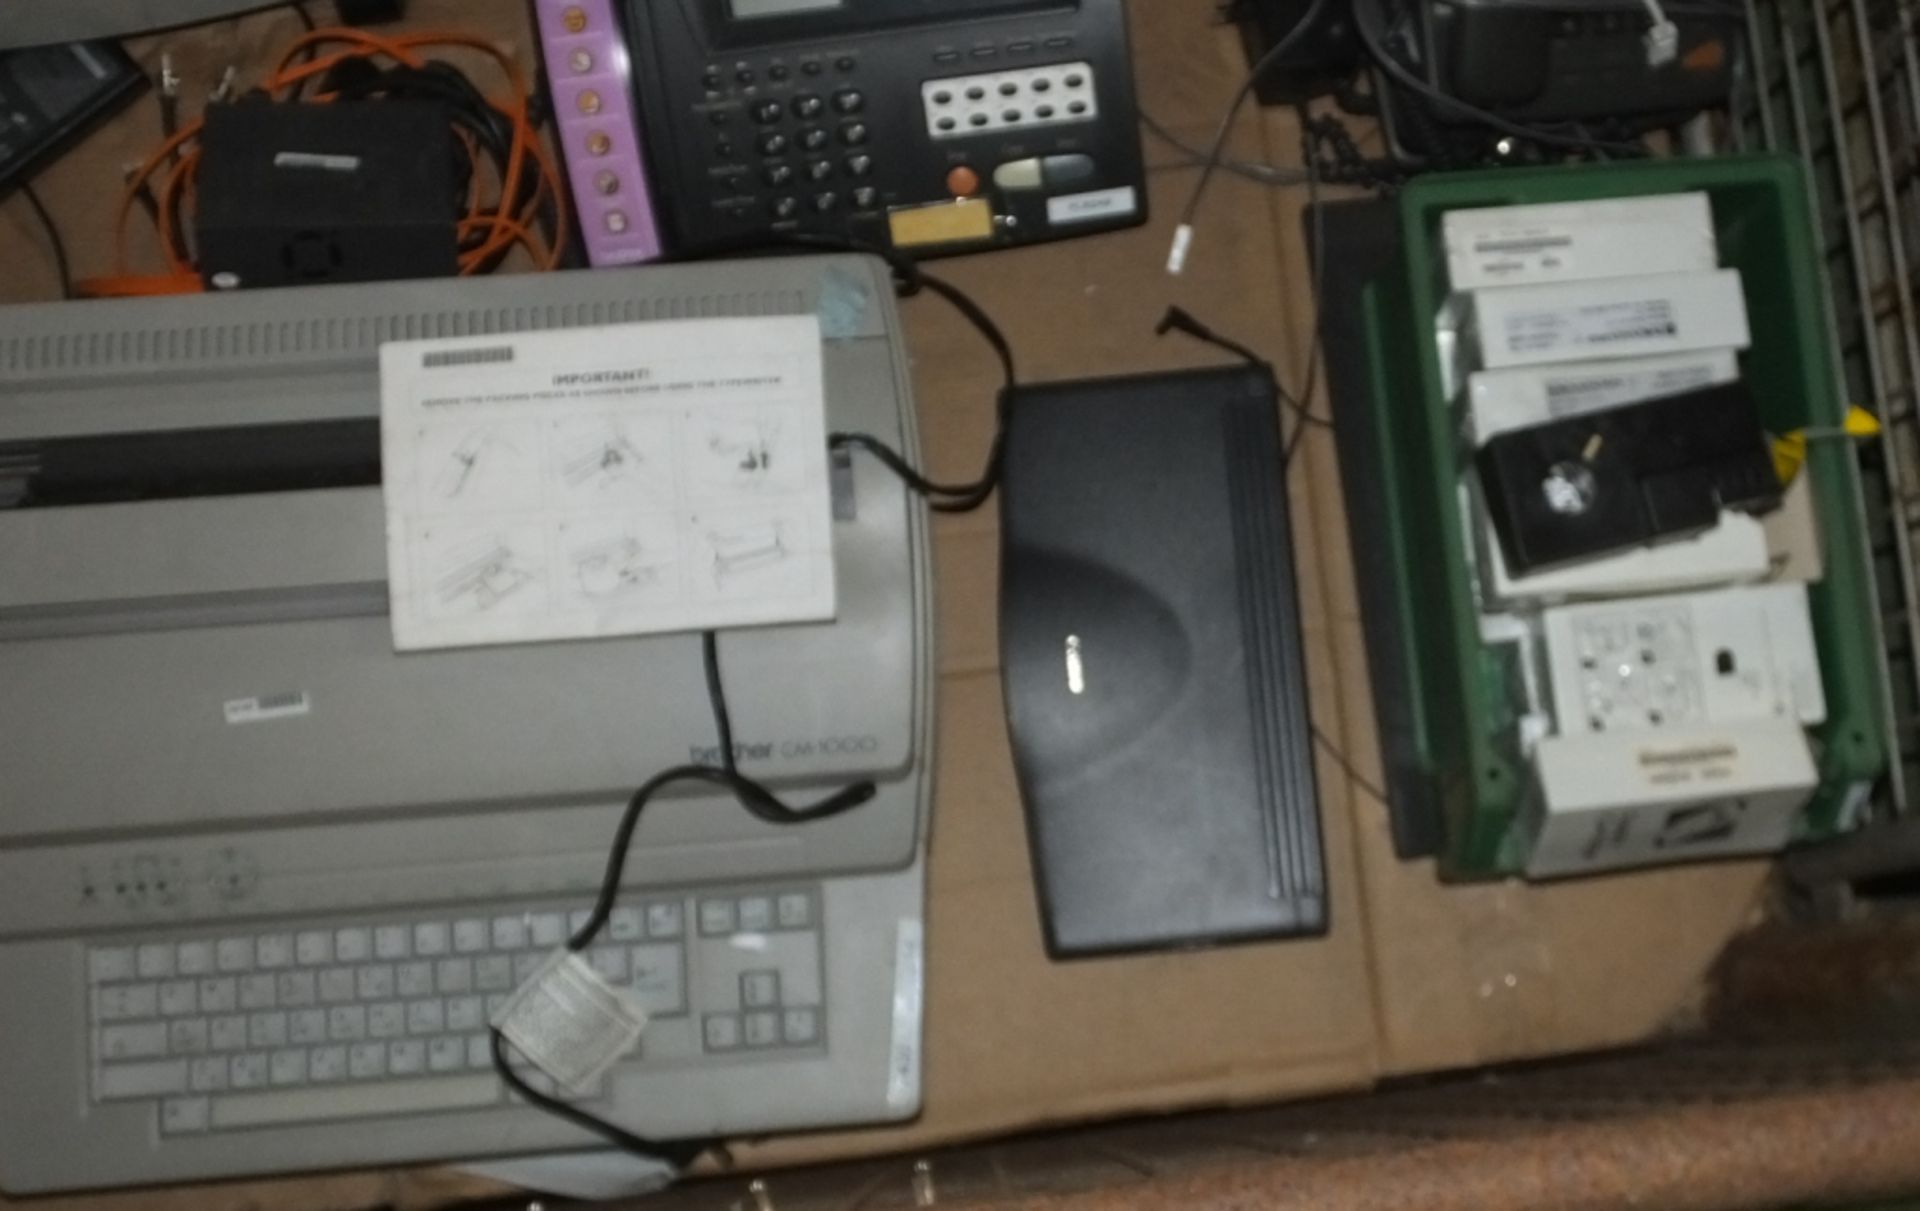 5x Panasonic Desk Phones, Brother Electronic Typewriter, Media Convertor, Rexel 250 Shredd - Image 3 of 5